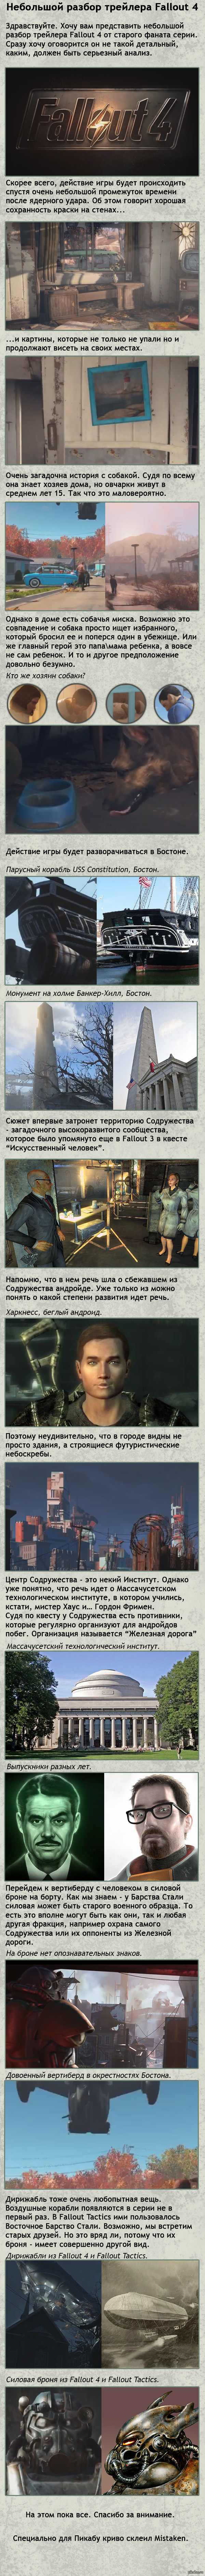    Fallout 4 